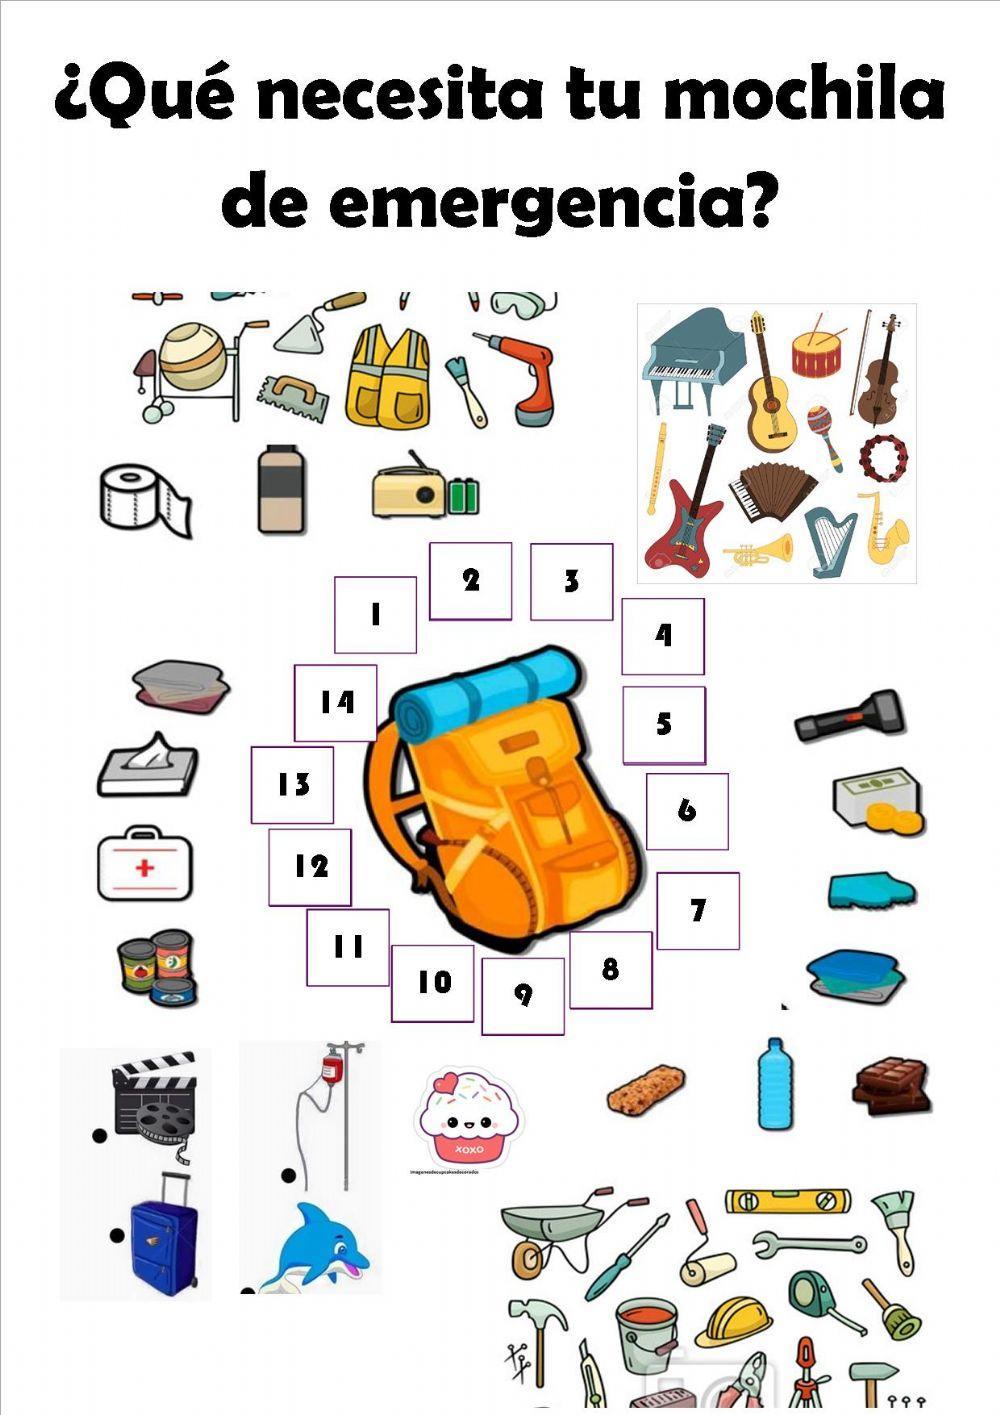 La mochila de emergencia